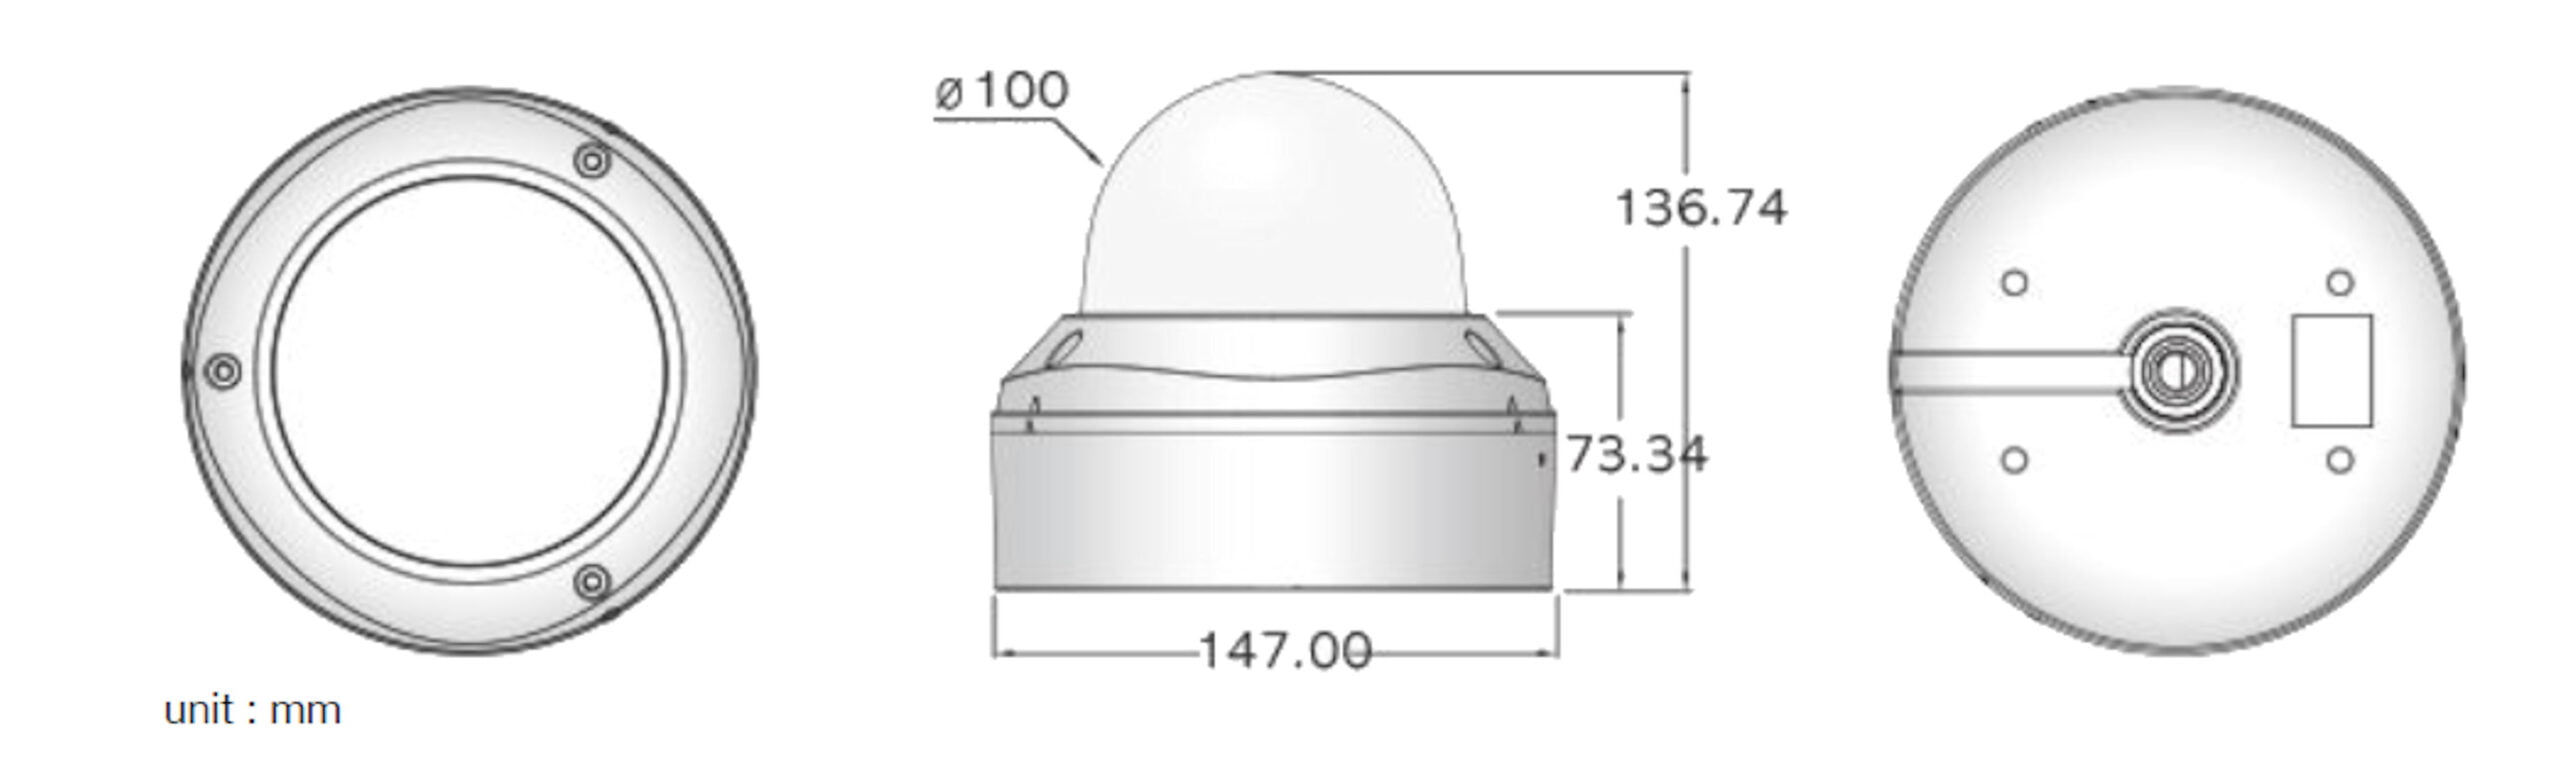 Eyemax UVI-2542V Superdome Series Indoor IR Dome 1080P HD-SDI Camera XDR-2542V, 2.8-12 mm 12V DC Dimensions